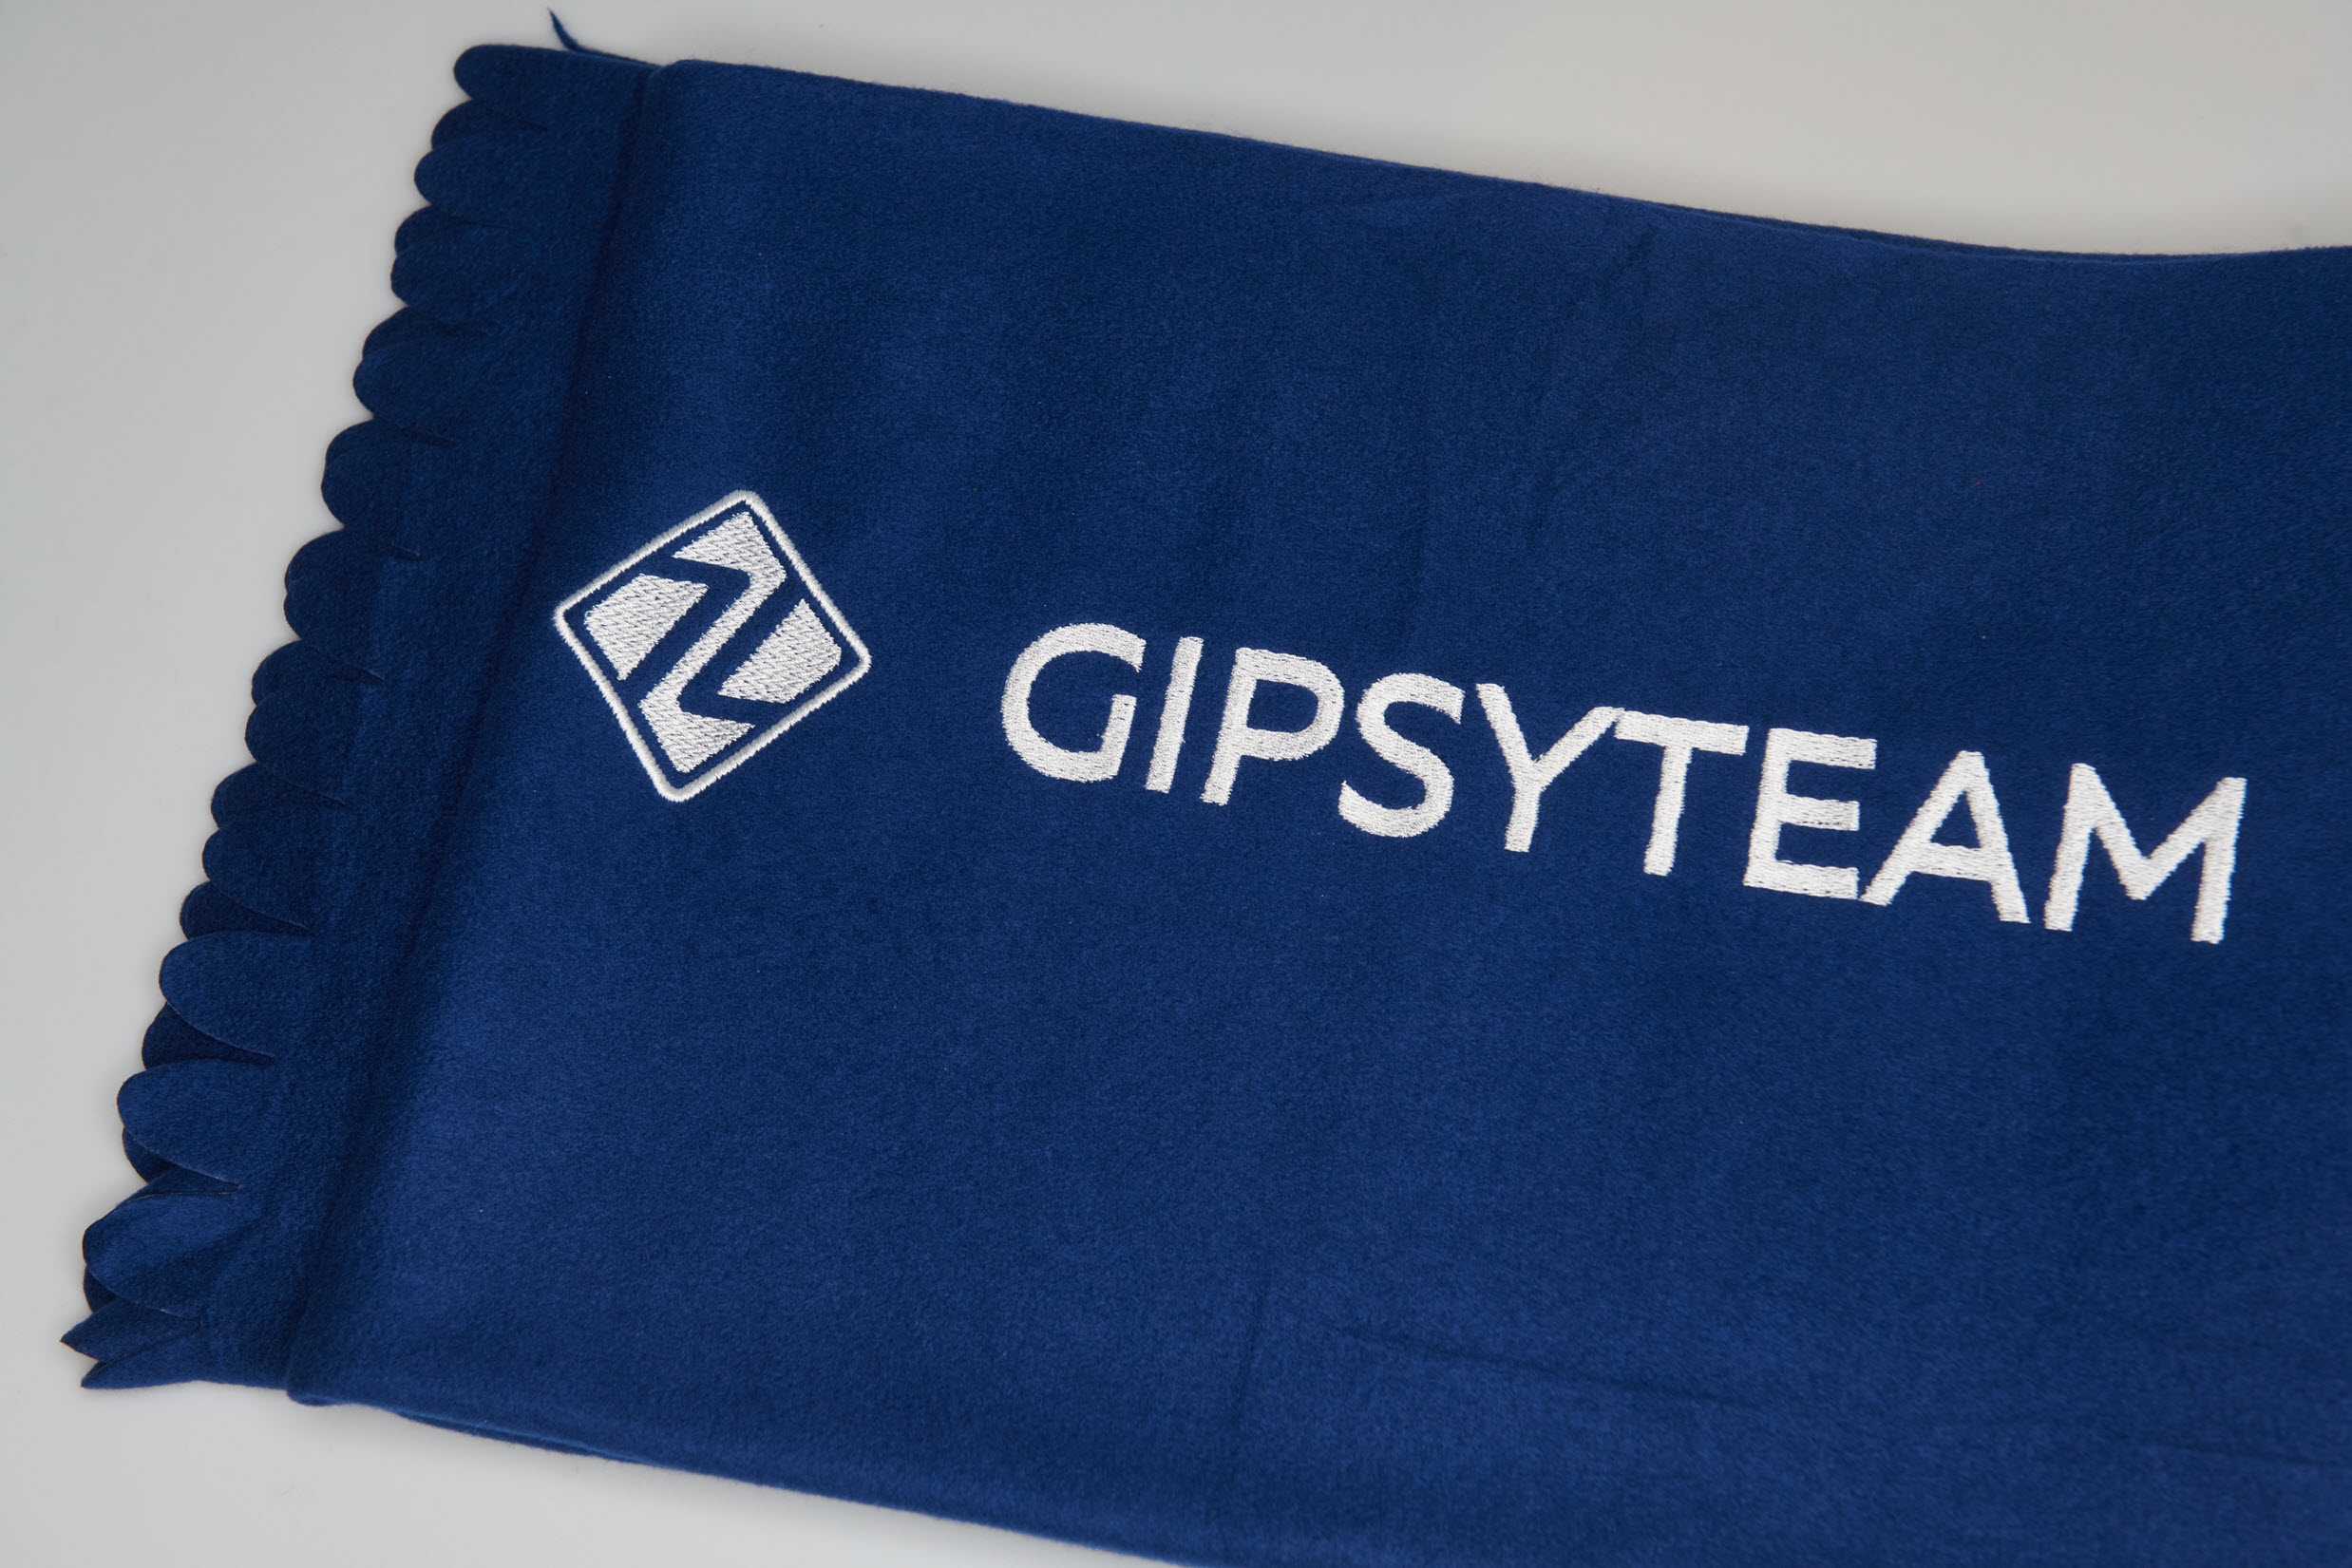 Gipsy team. Плед с логотипом. Плед с логотипом ман. Джипси тим. Одеяло с логотипом Nike.